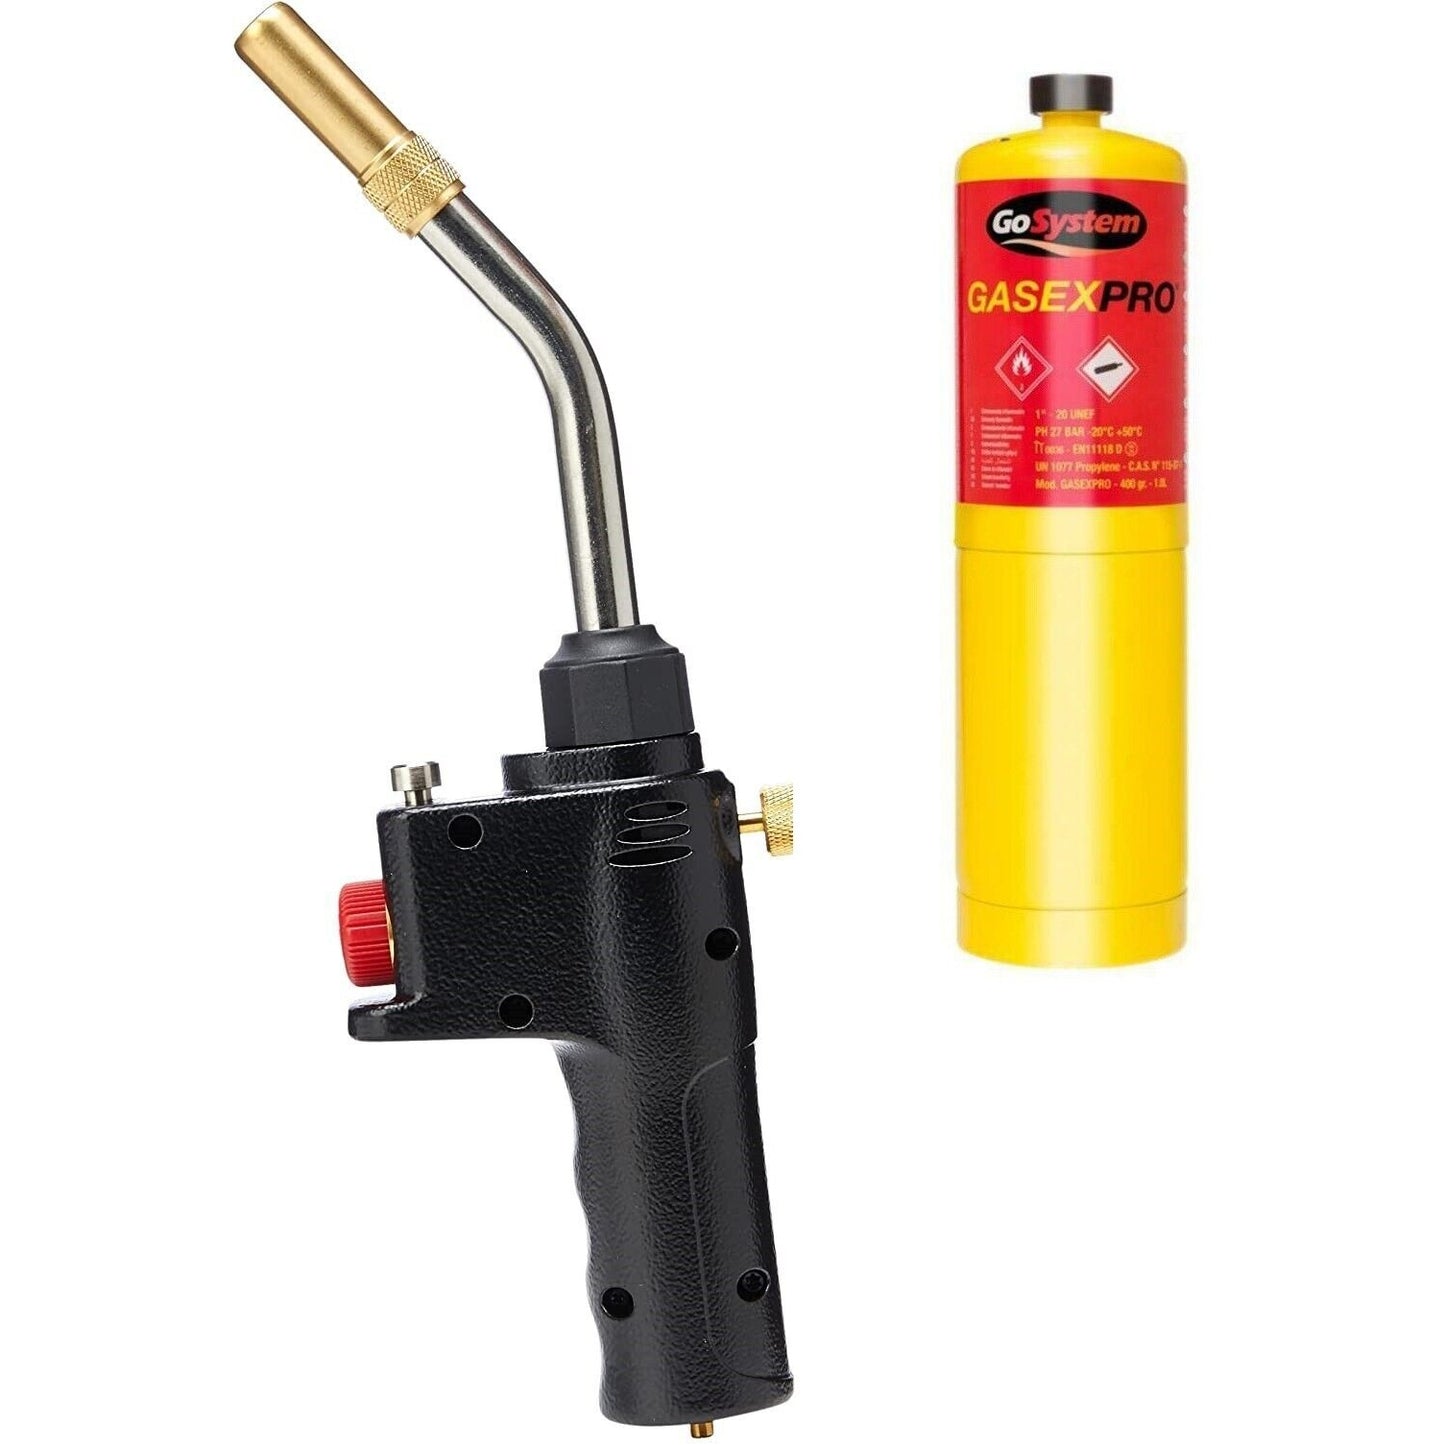 Gosystem Butane Gas Cartridge Plumbers Welding DIY Quick Auto Power Torch Pro